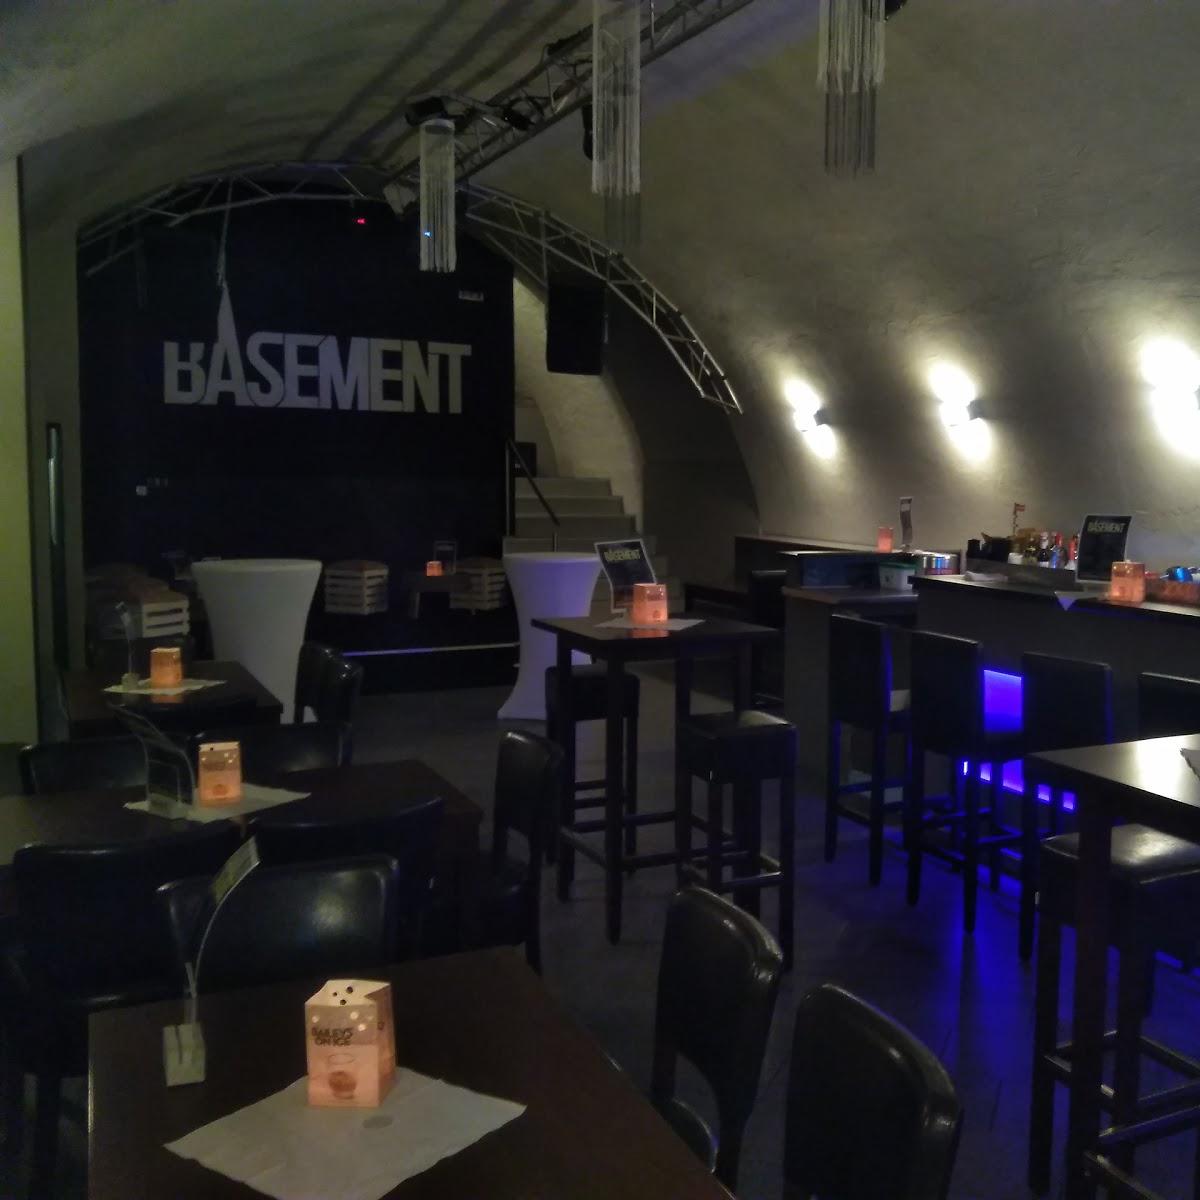 Restaurant "Basement - Eventbar-Cocktails" in Großmehring